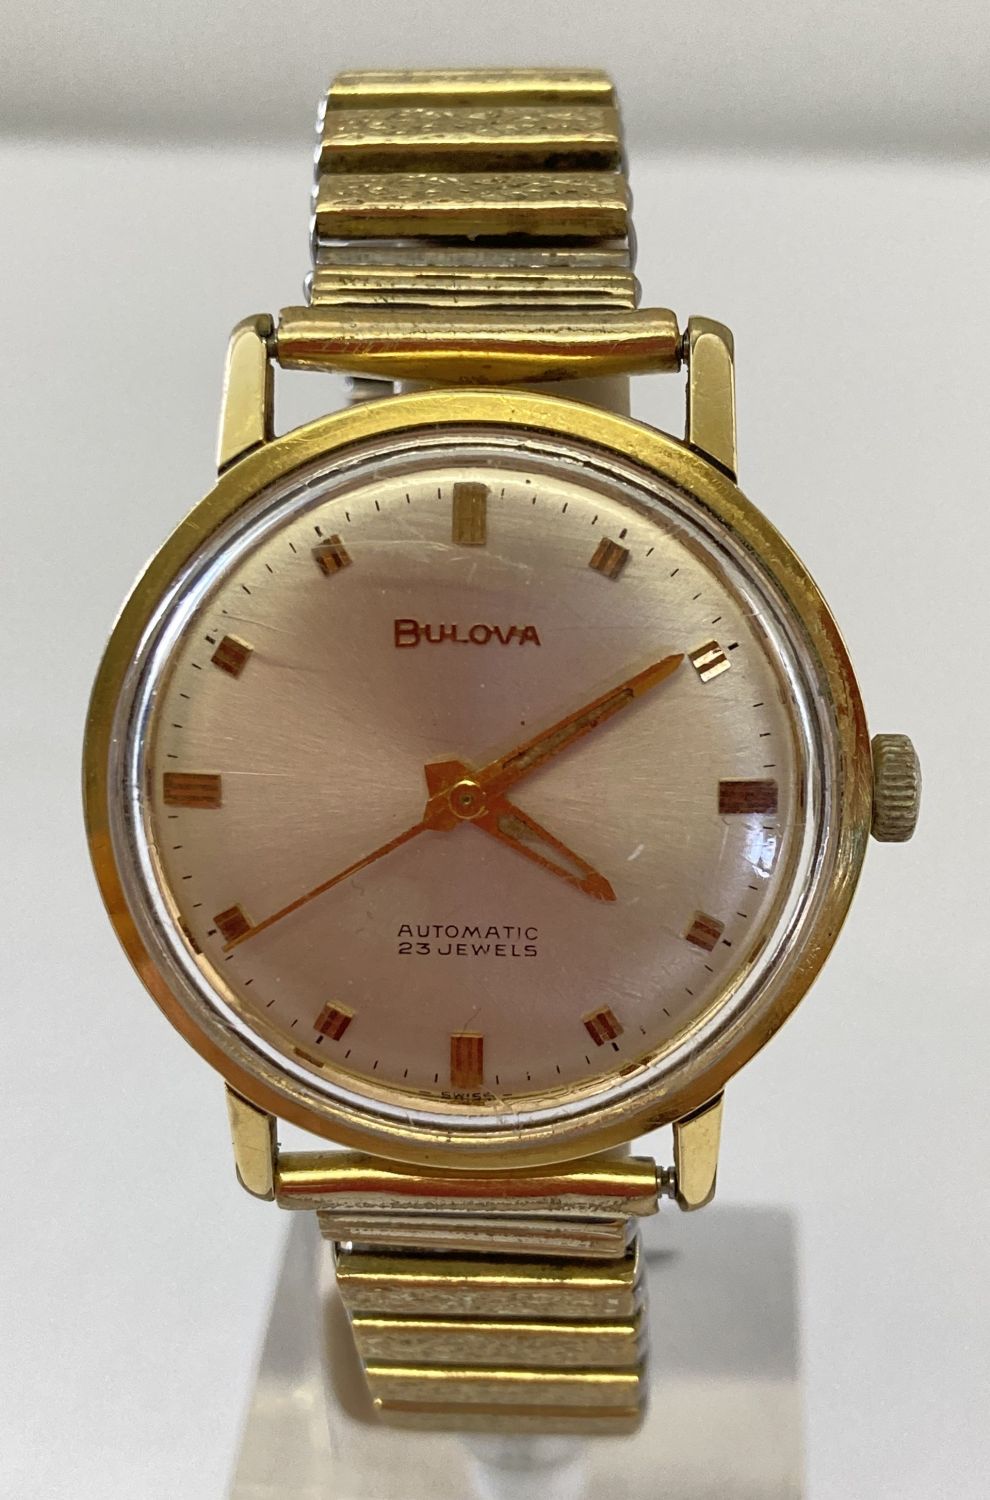 A vintage mens automatic wristwatch by Bulova with expanding bracelet strap.